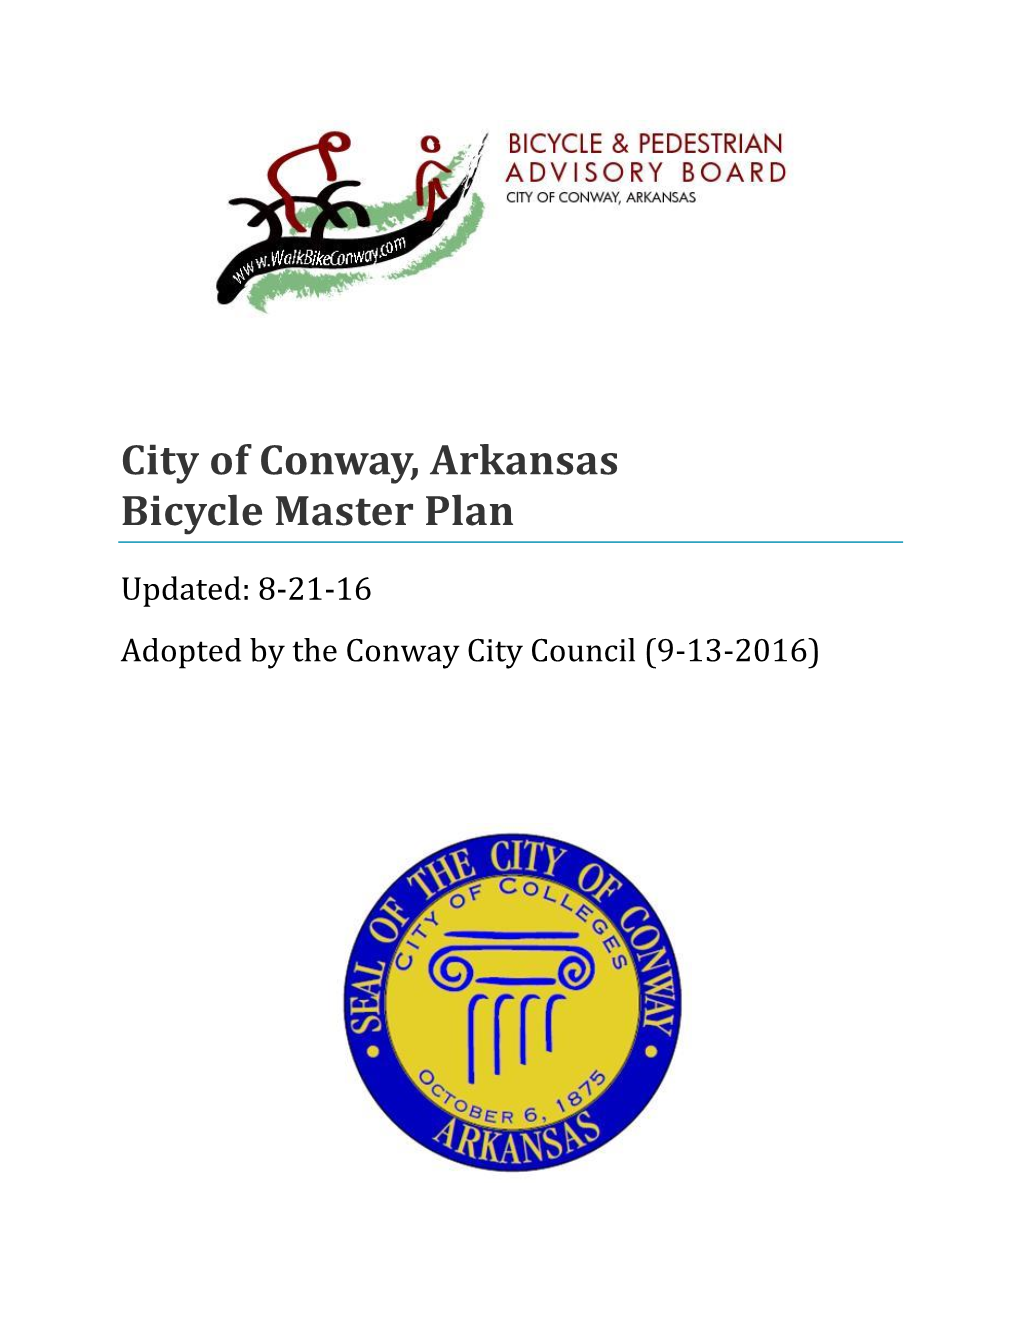 City of Conway, Arkansas Bicycle Master Plan